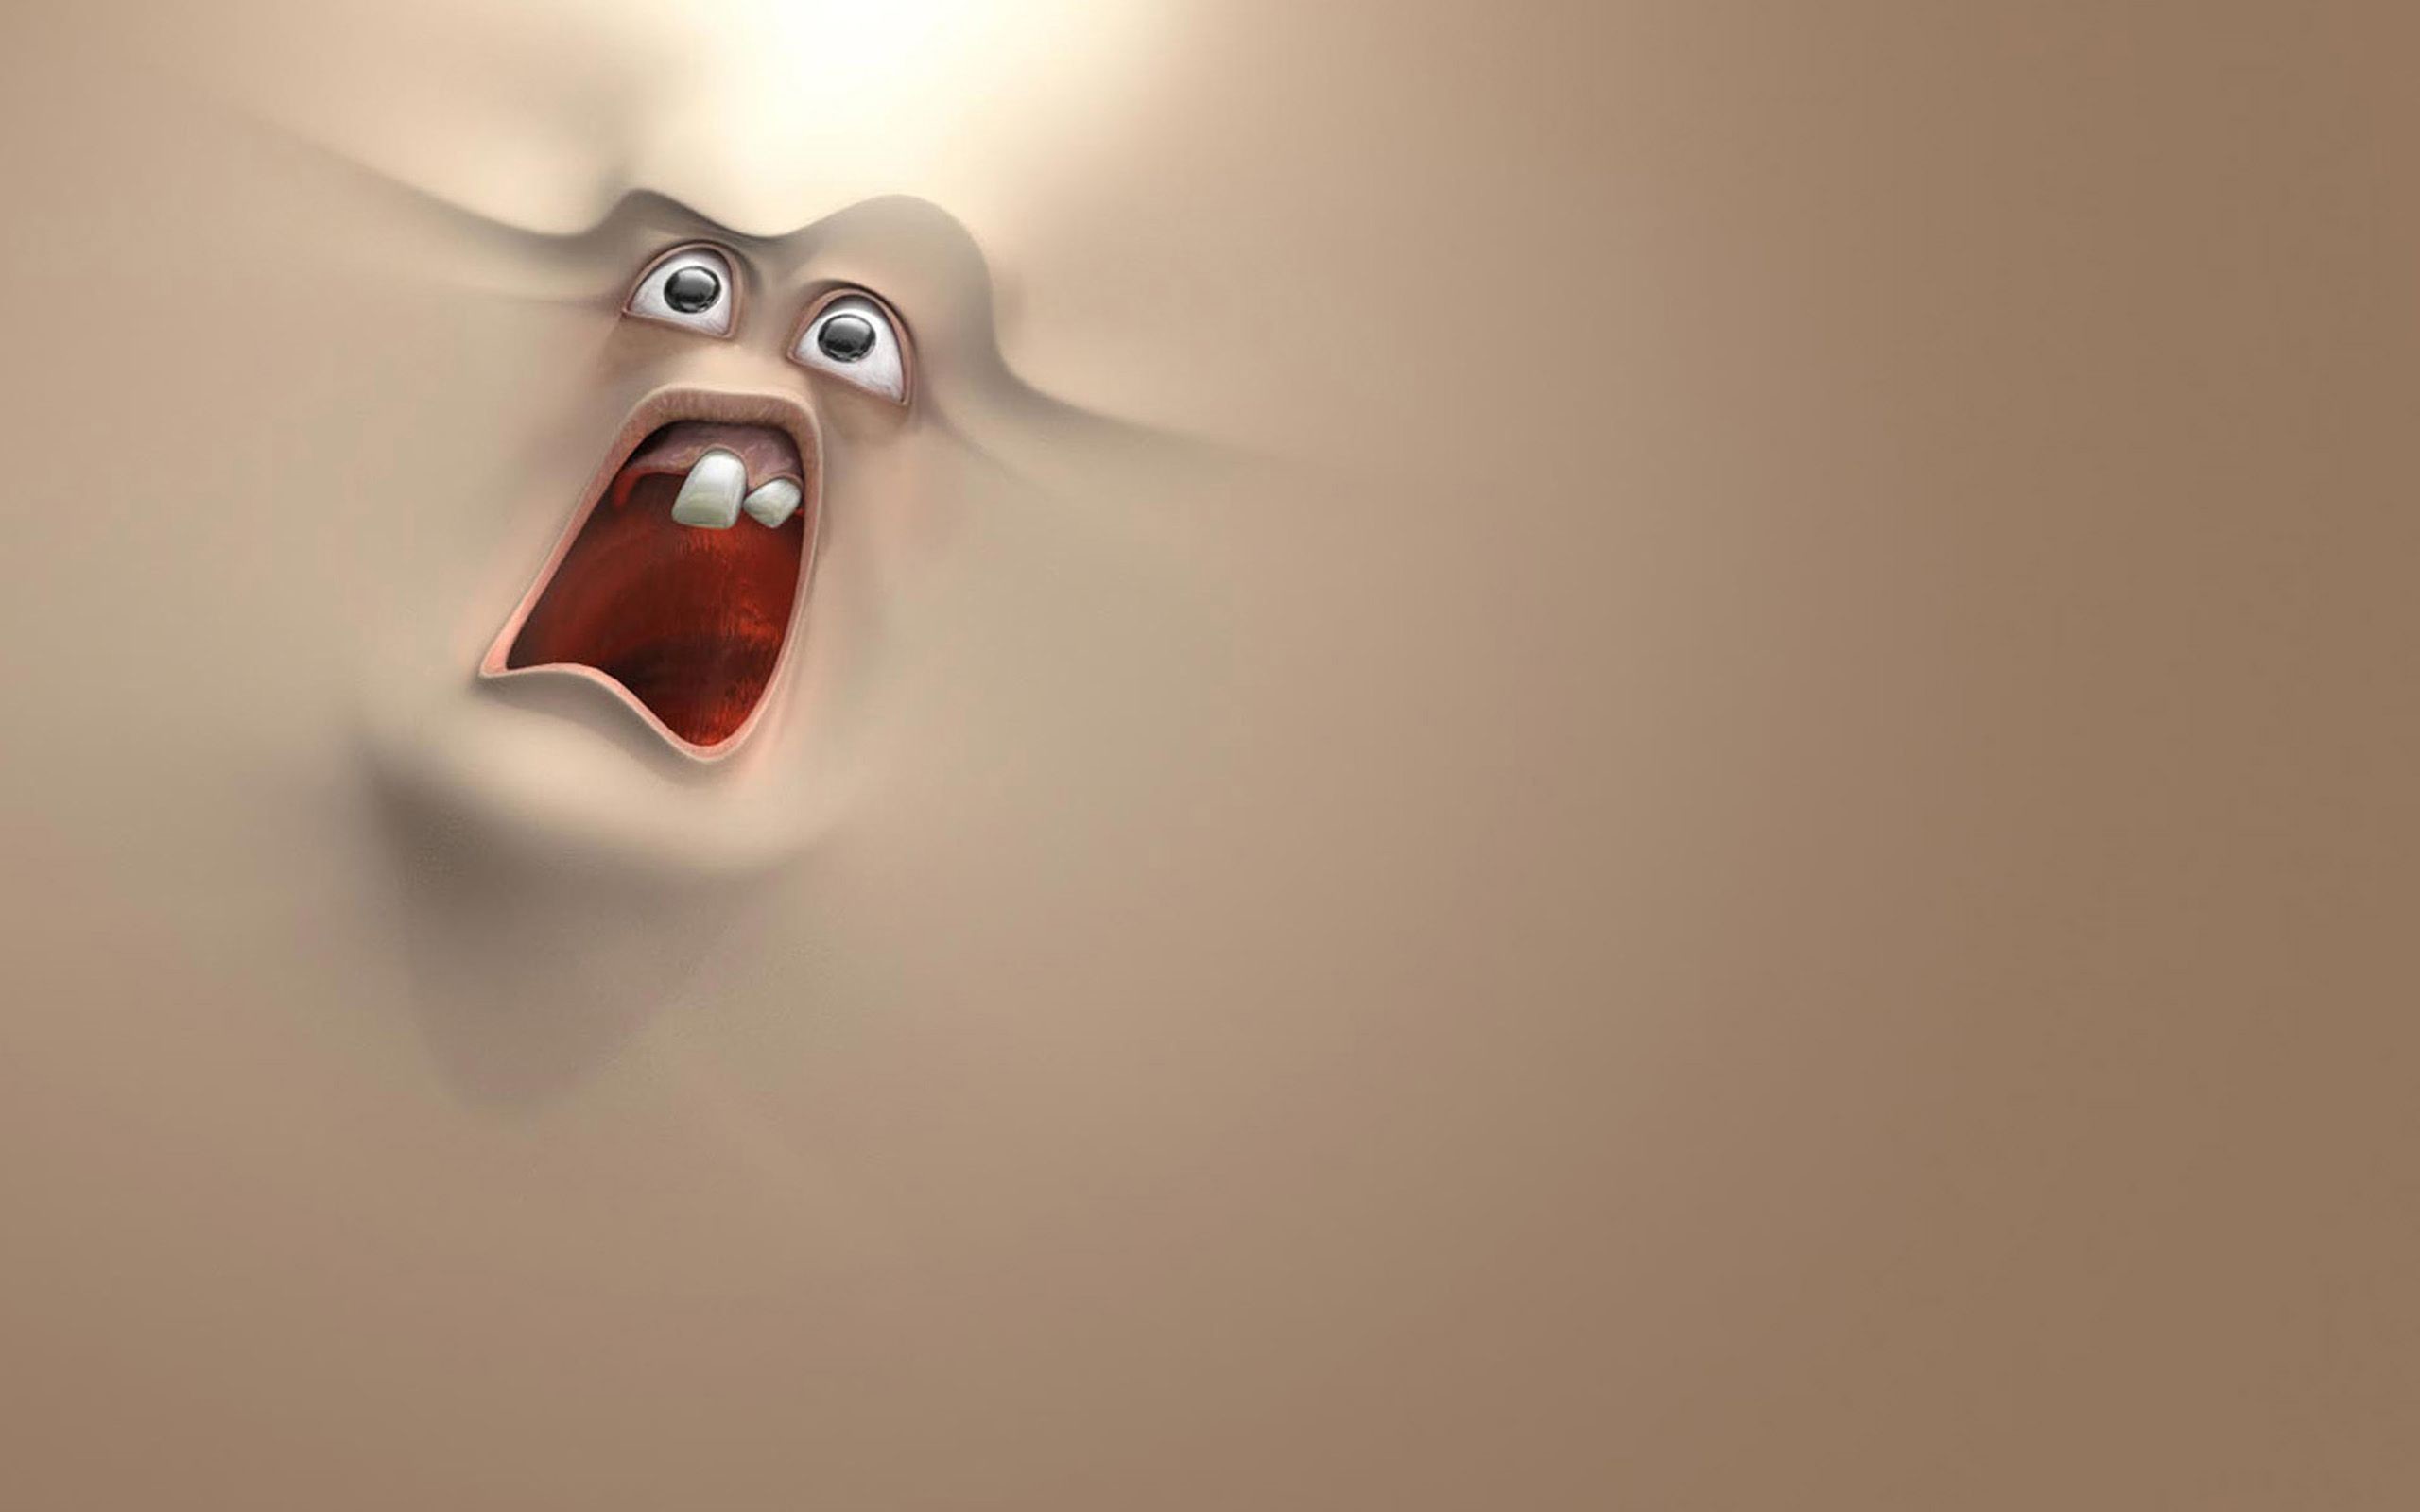 Funny Face Cartoon 3d Animated Wallpaper Hd - Funny Desktop Backgrounds -  2560x1600 Wallpaper 